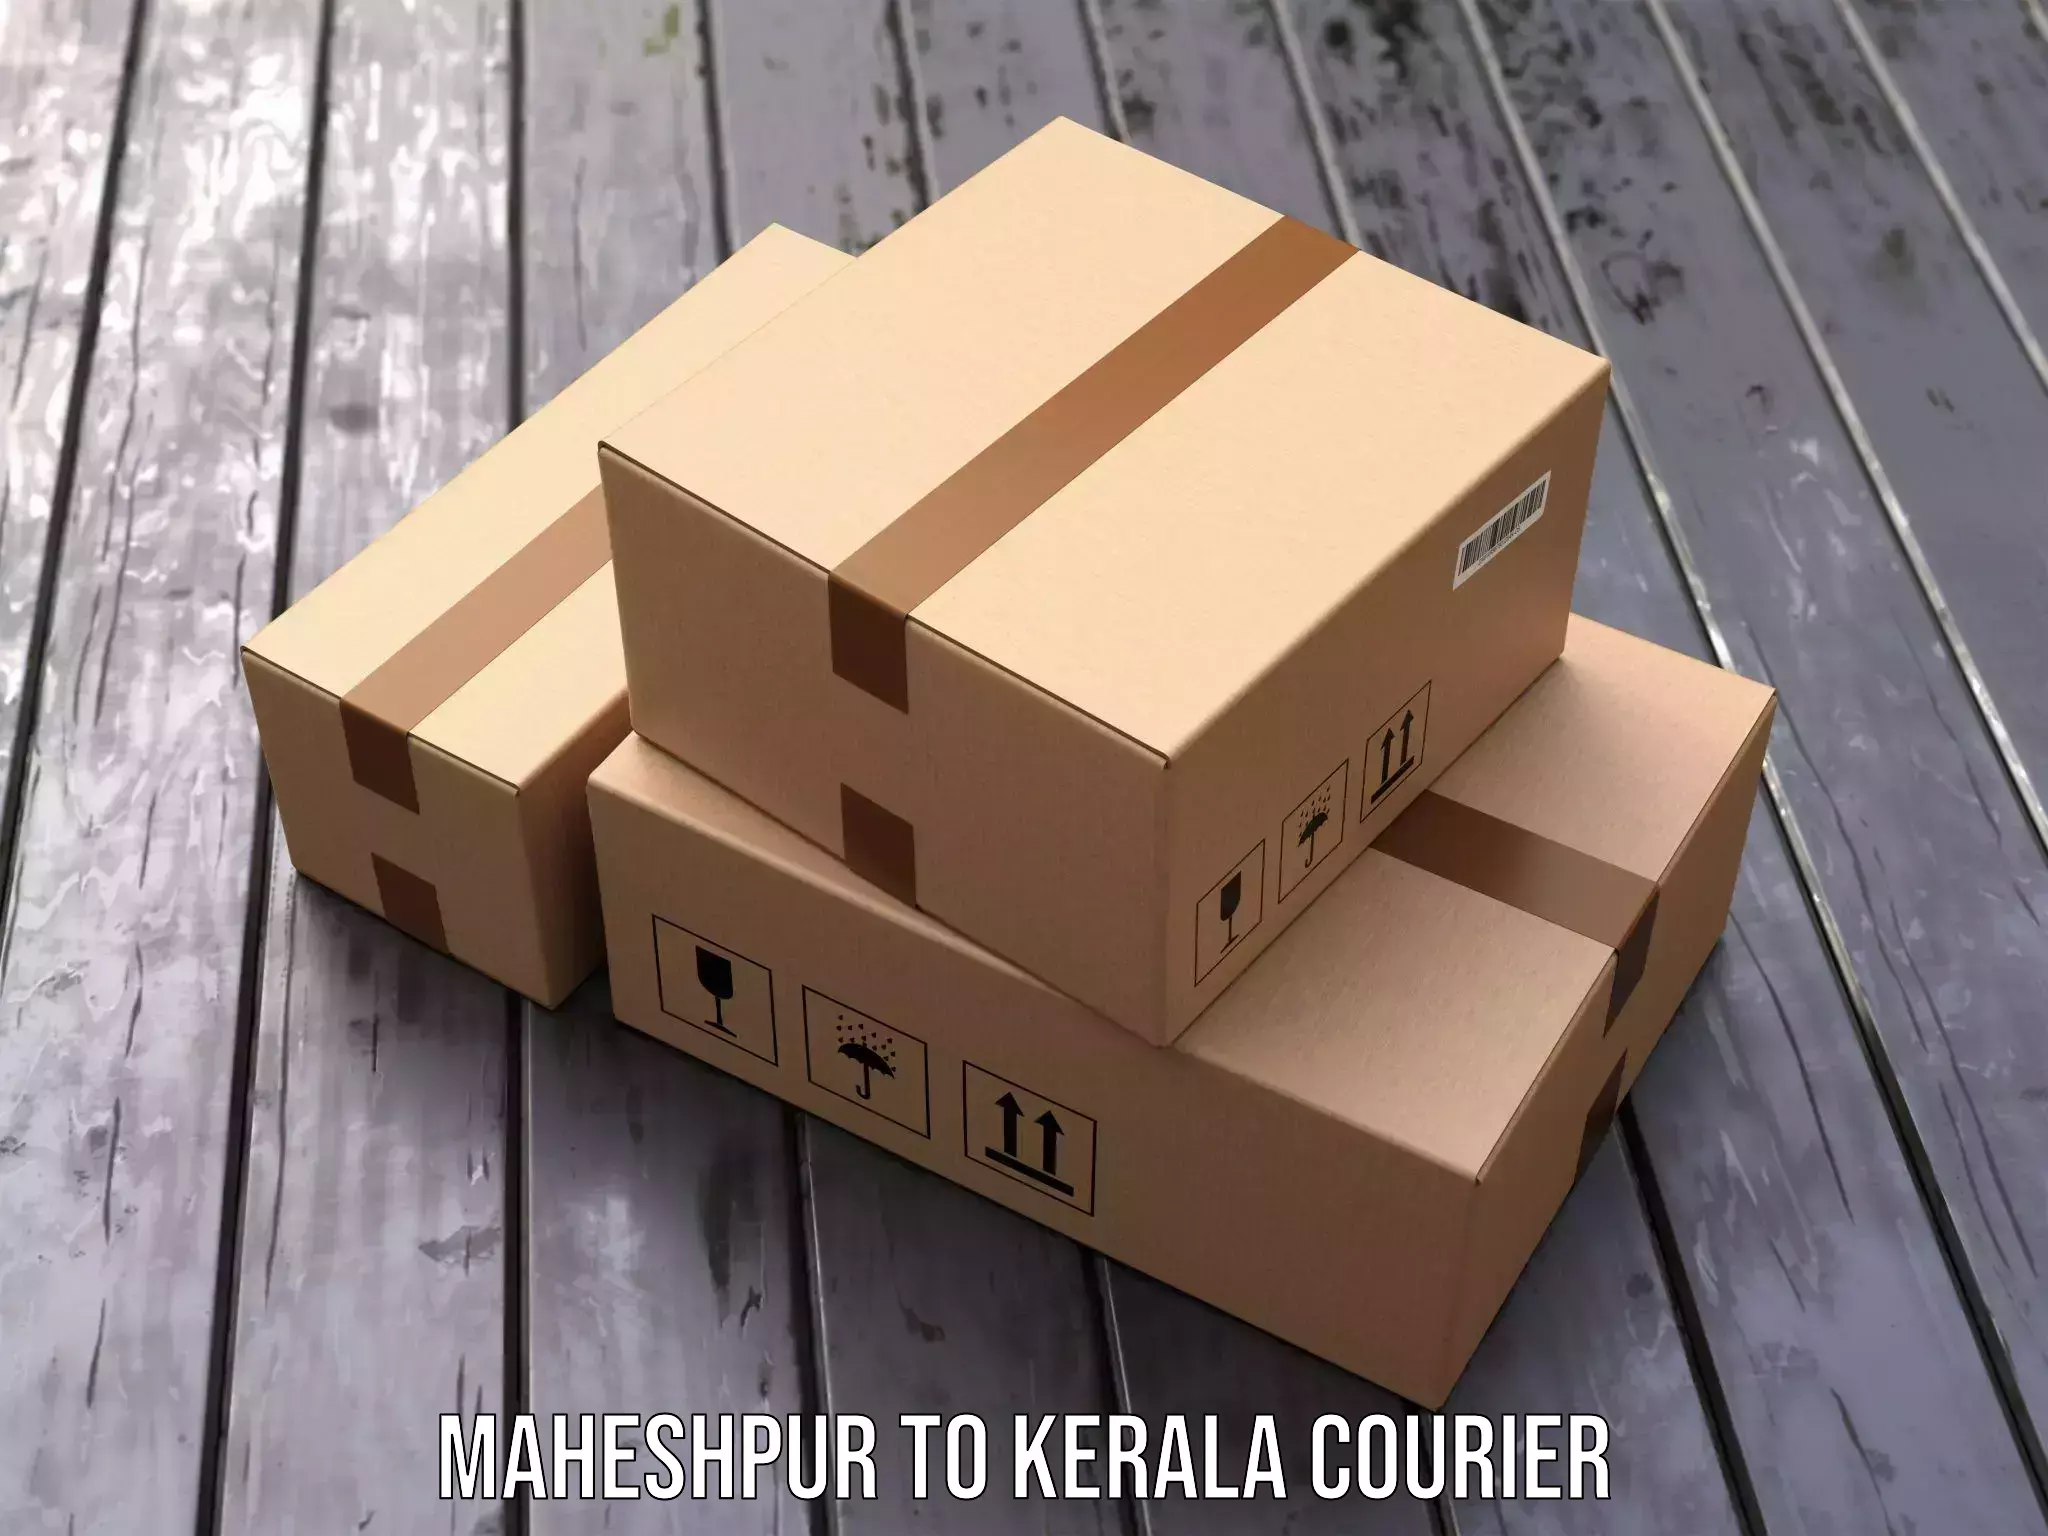 On-demand shipping options Maheshpur to Kerala